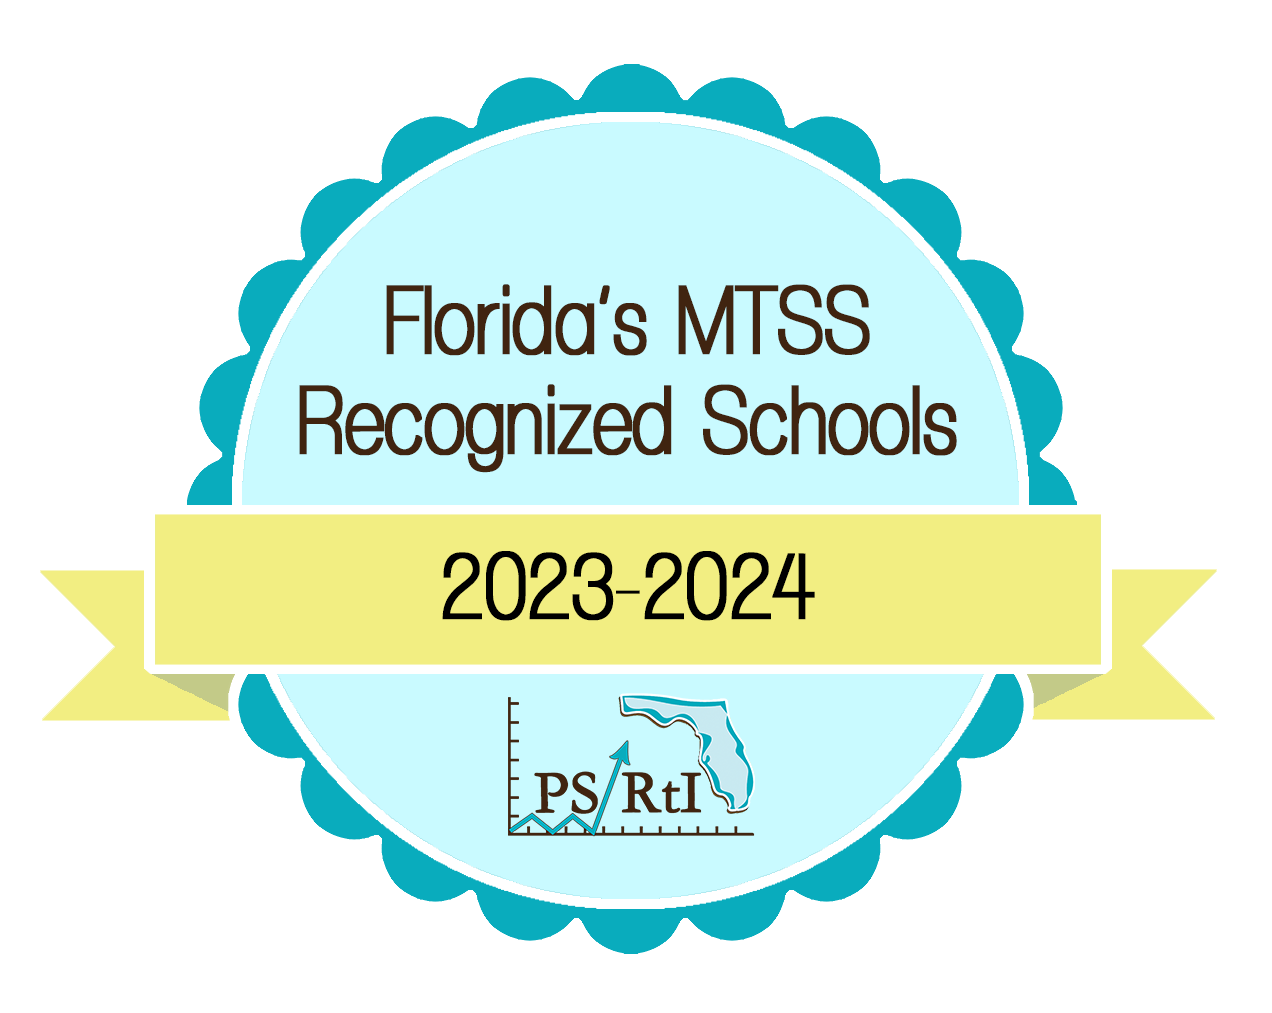 Florida's MTSS Recognized Schools Logo